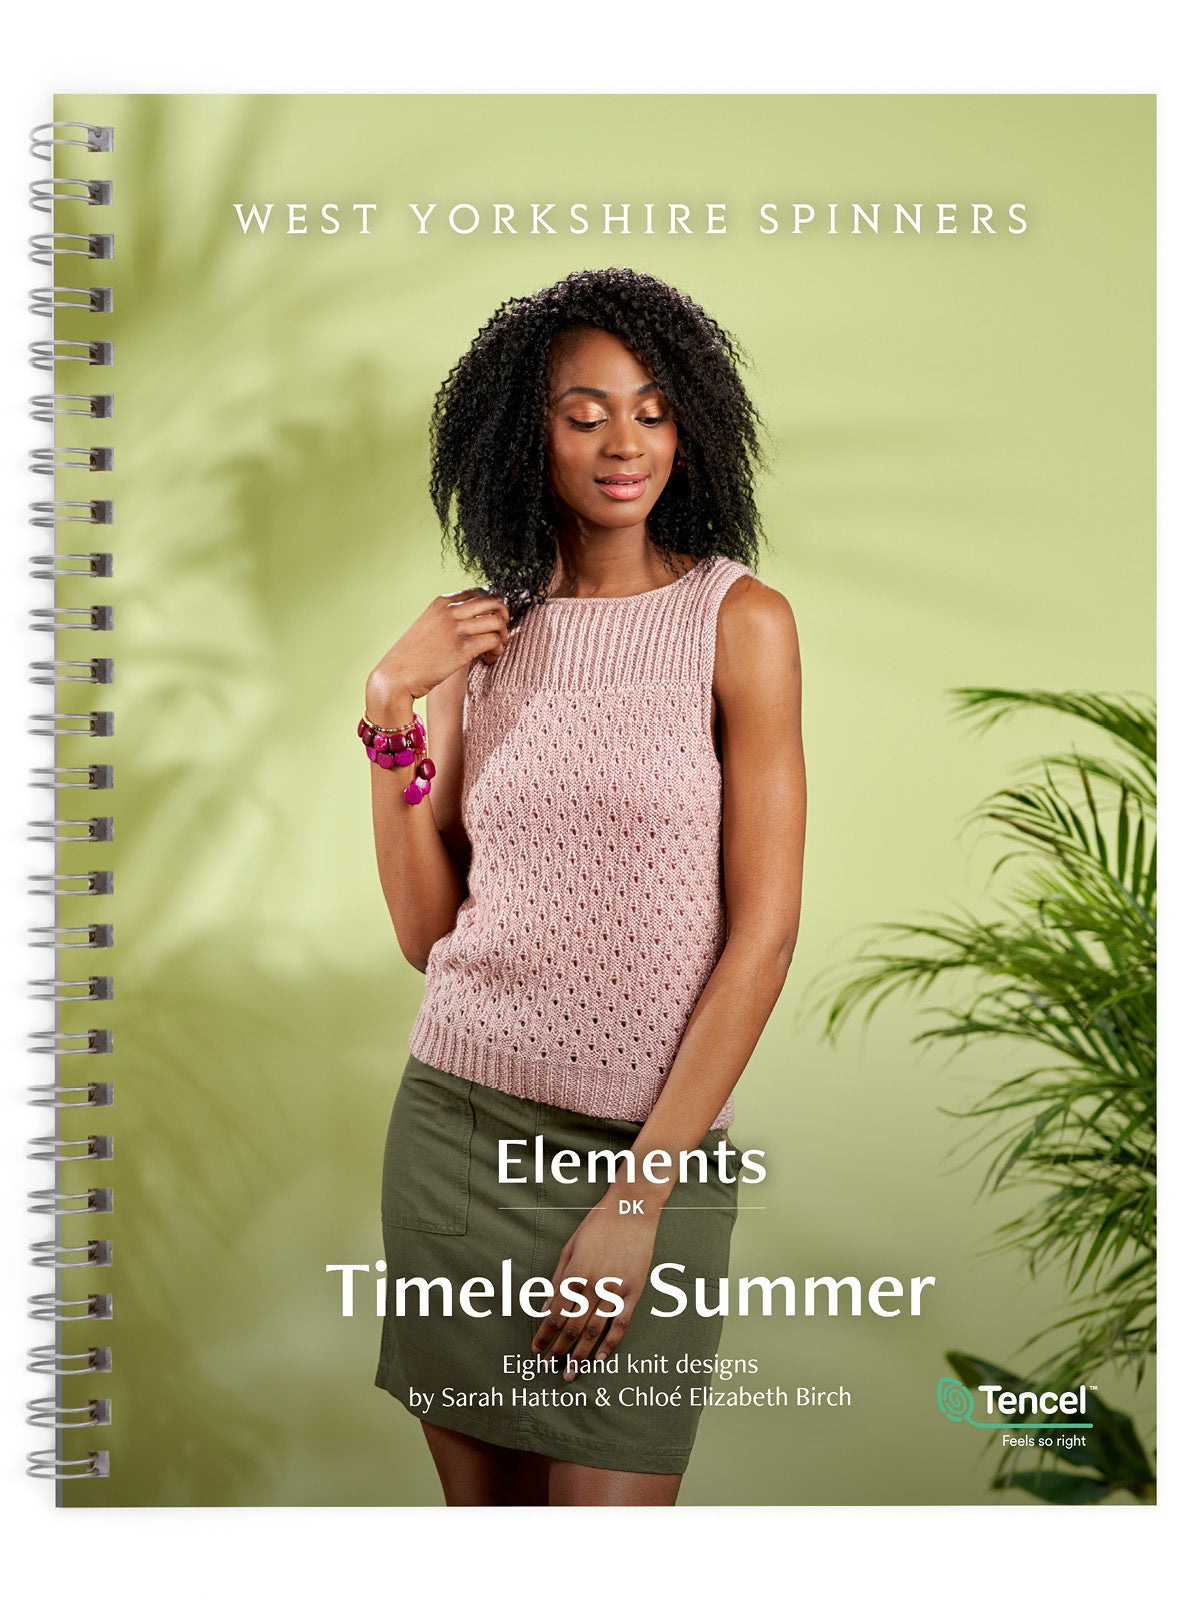 WYS Elements DK Timeless Summer